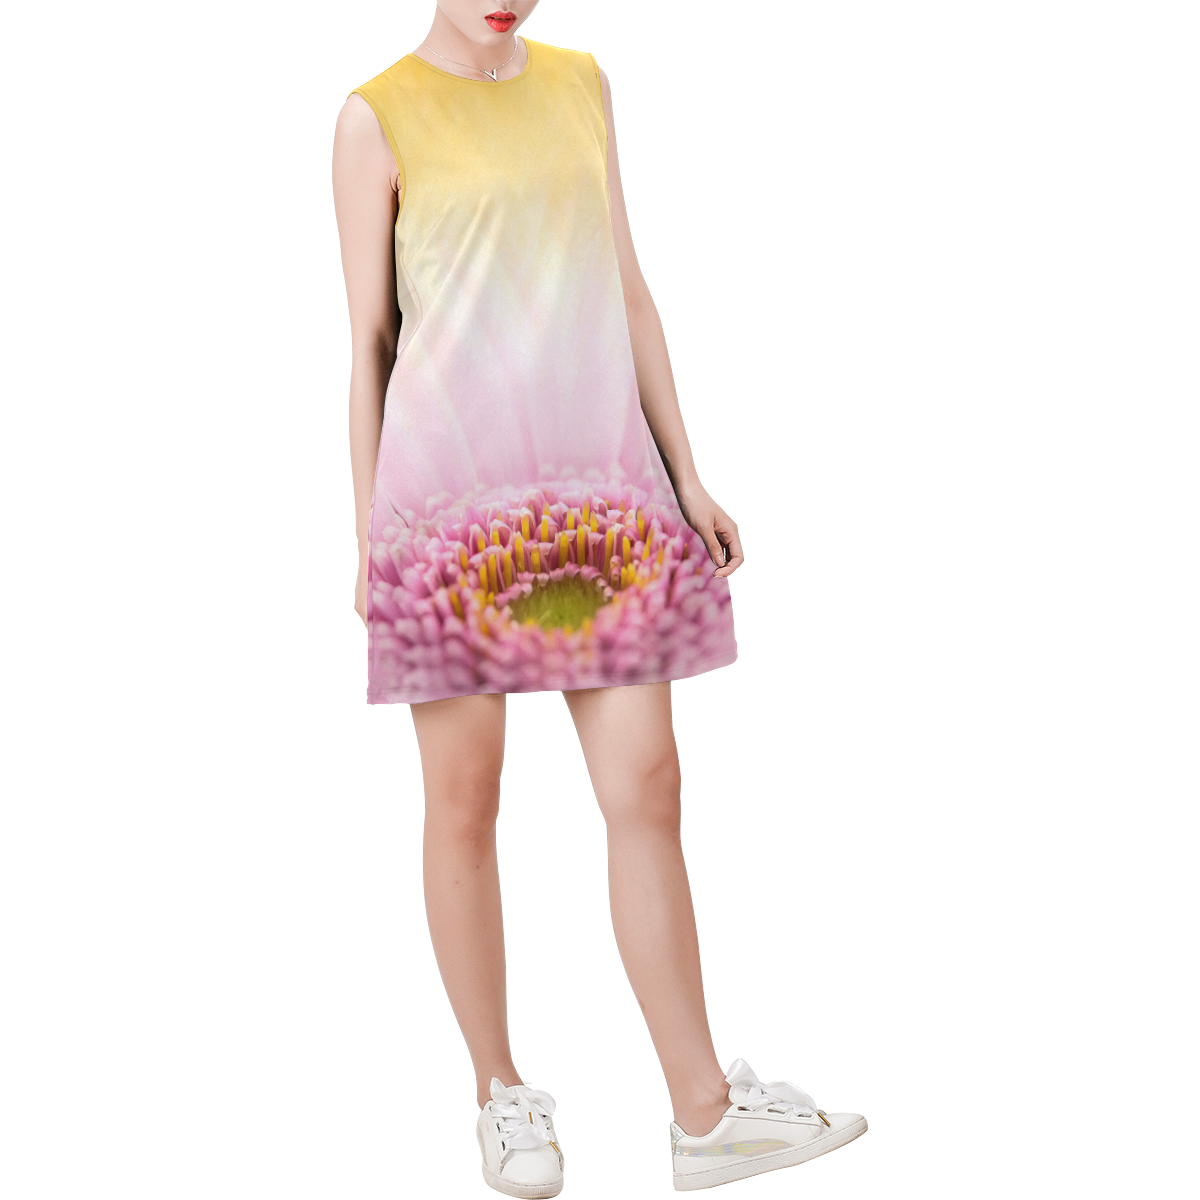 Gerbera Daisy - Pink Flower on Watercolor Yellow Sleeveless Round Neck Shift Dress (Model D51)